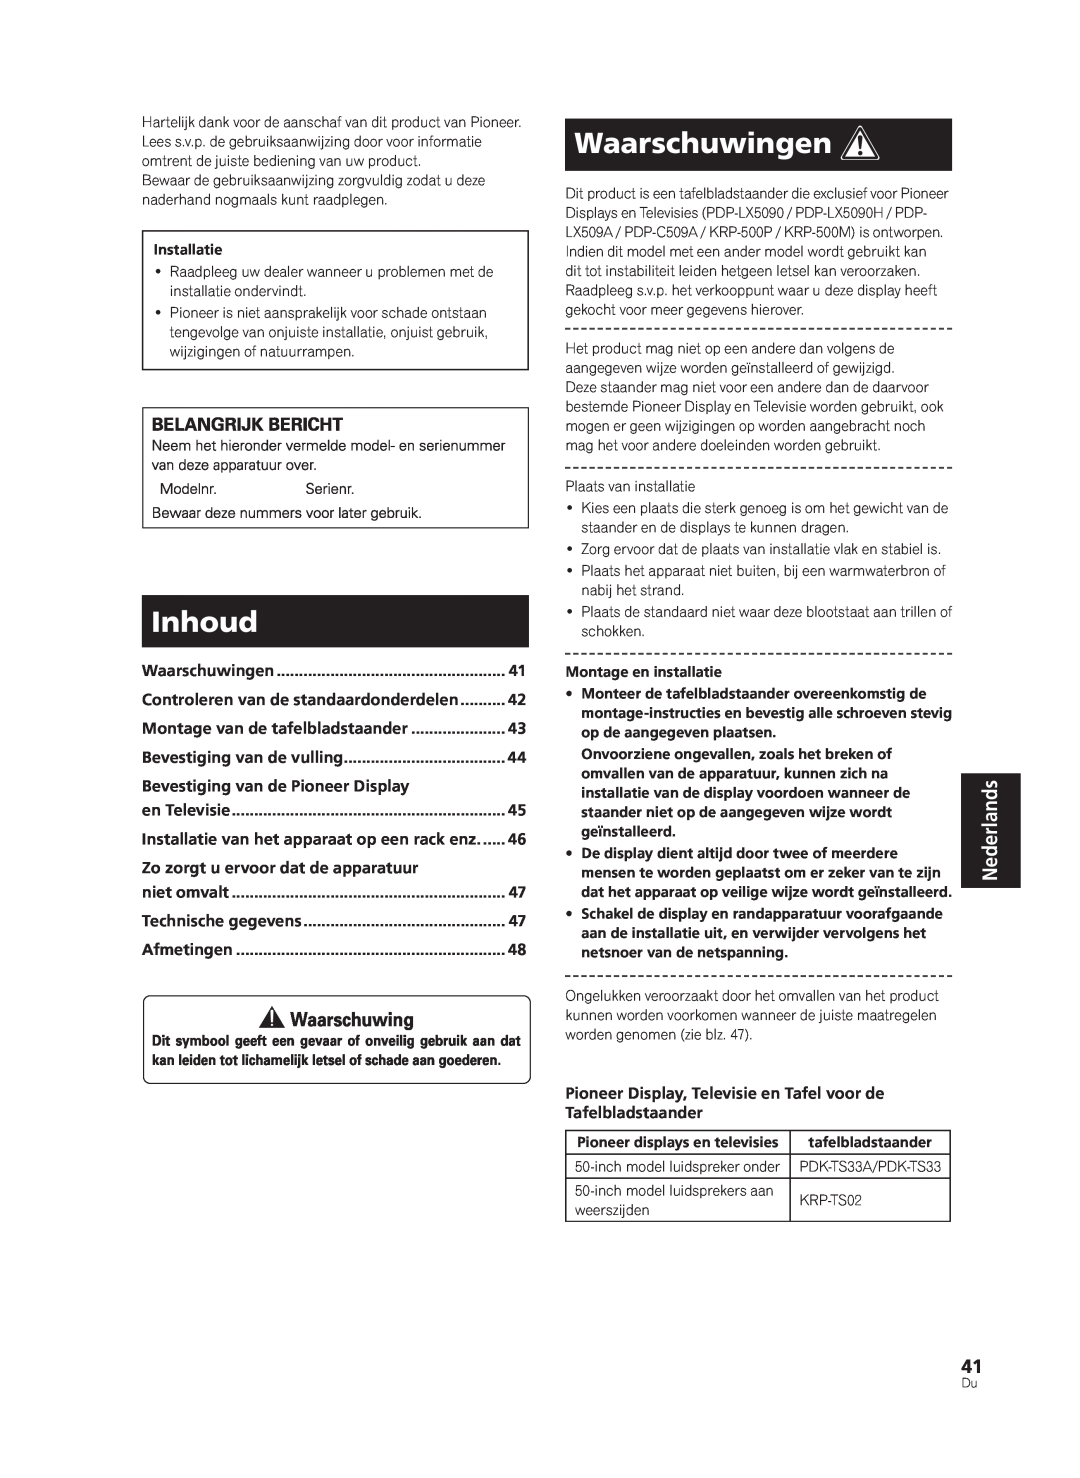 Pioneer KRP-TS02, PDK-TS33A manual Inhoud, Waarschuwingen, Nederlands 